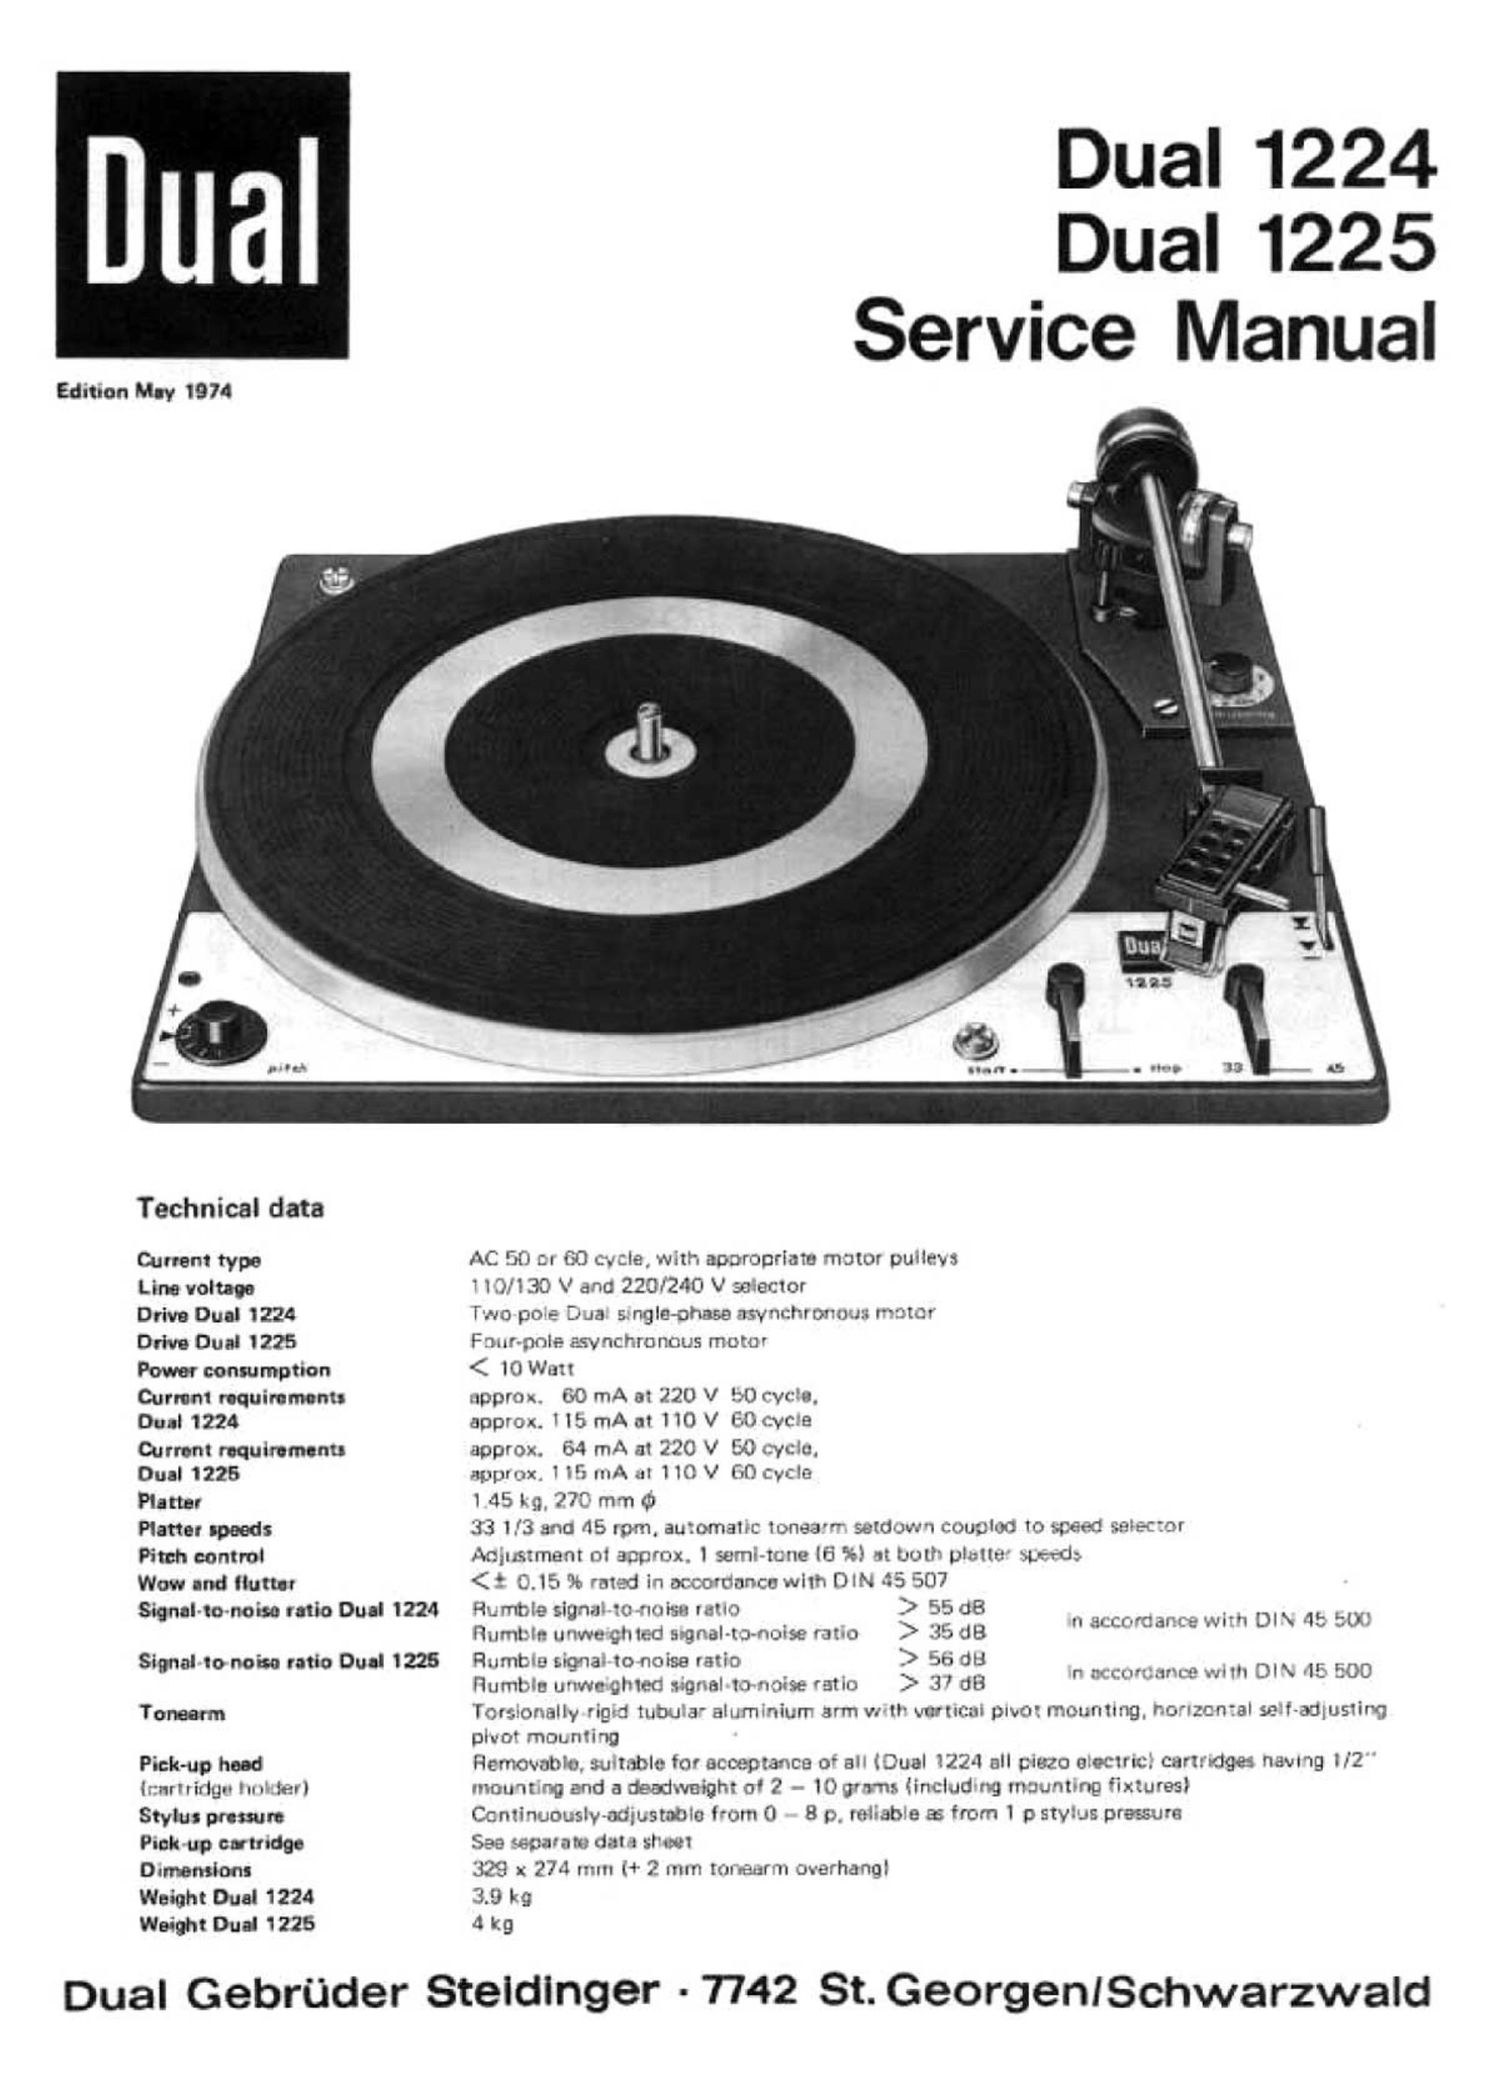 Dual 1225 Service Manual